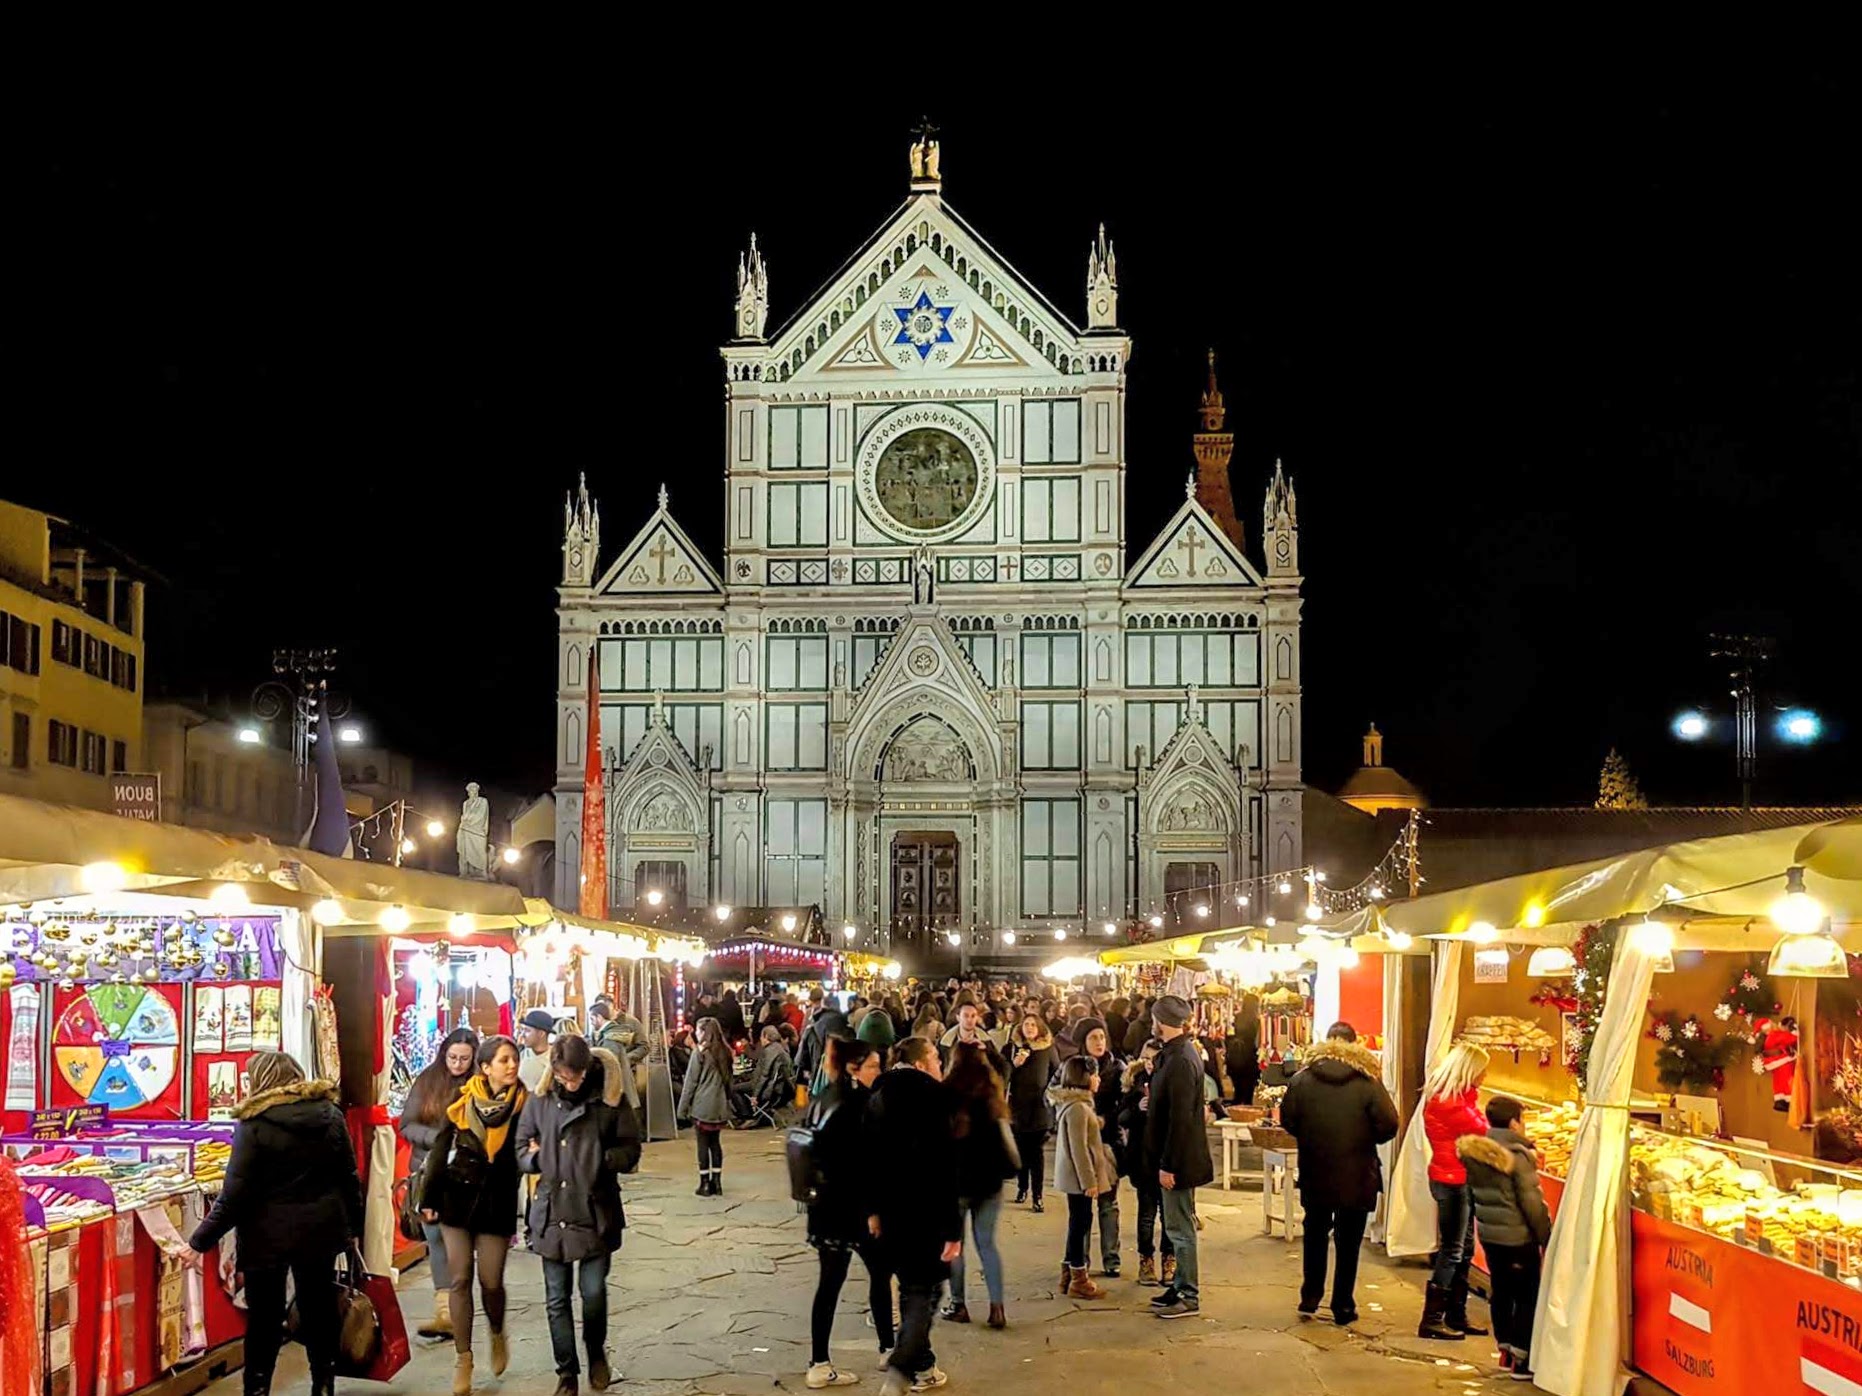 Mercato di Natale in Piazza Santa Croce, Firenze